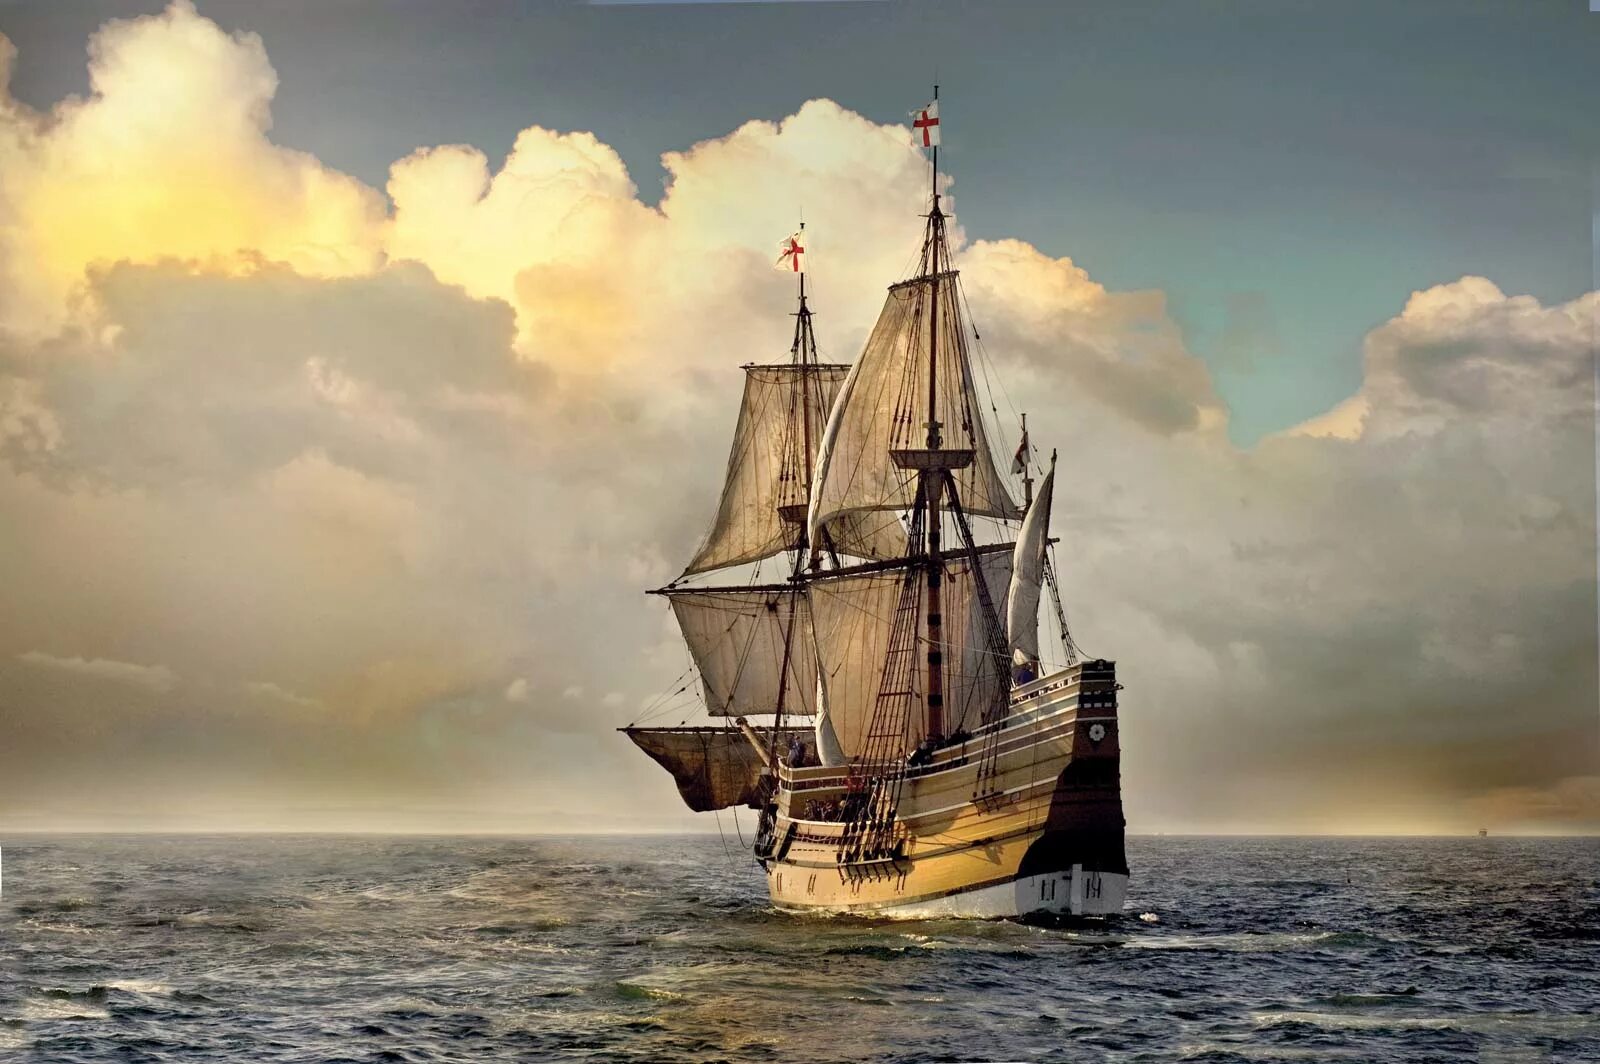 Корабль Мэйфлауэр 1620. Mayflower корабль. Мэйфлауэр корабль 1620 год. Mayflower Pilgrims. Arrived in country